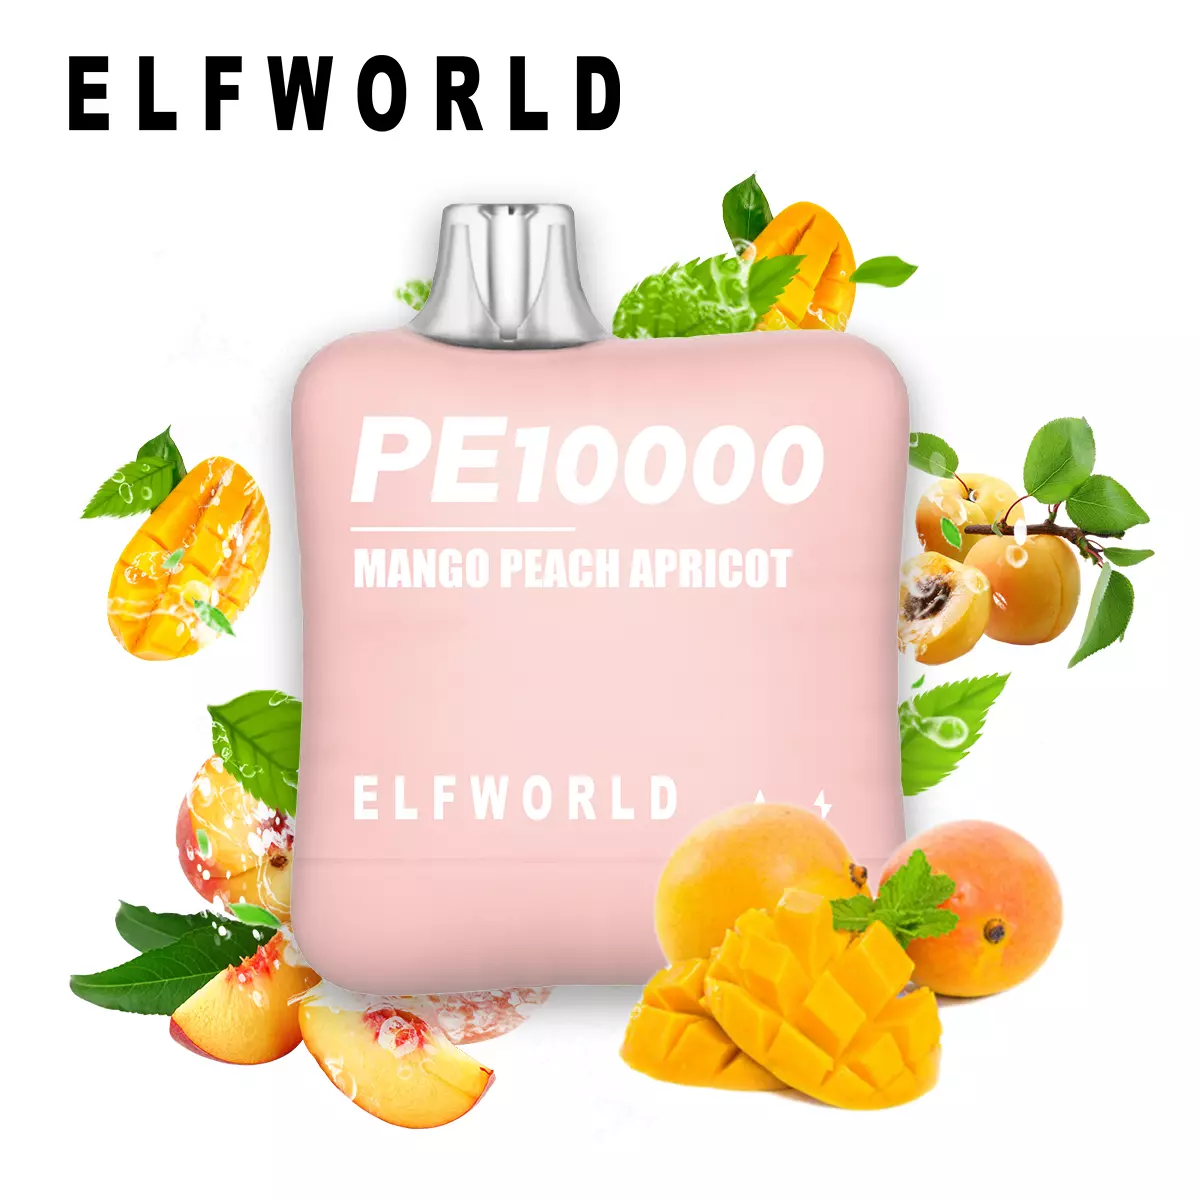 Elf World PE 10000 MangoPeachApricot